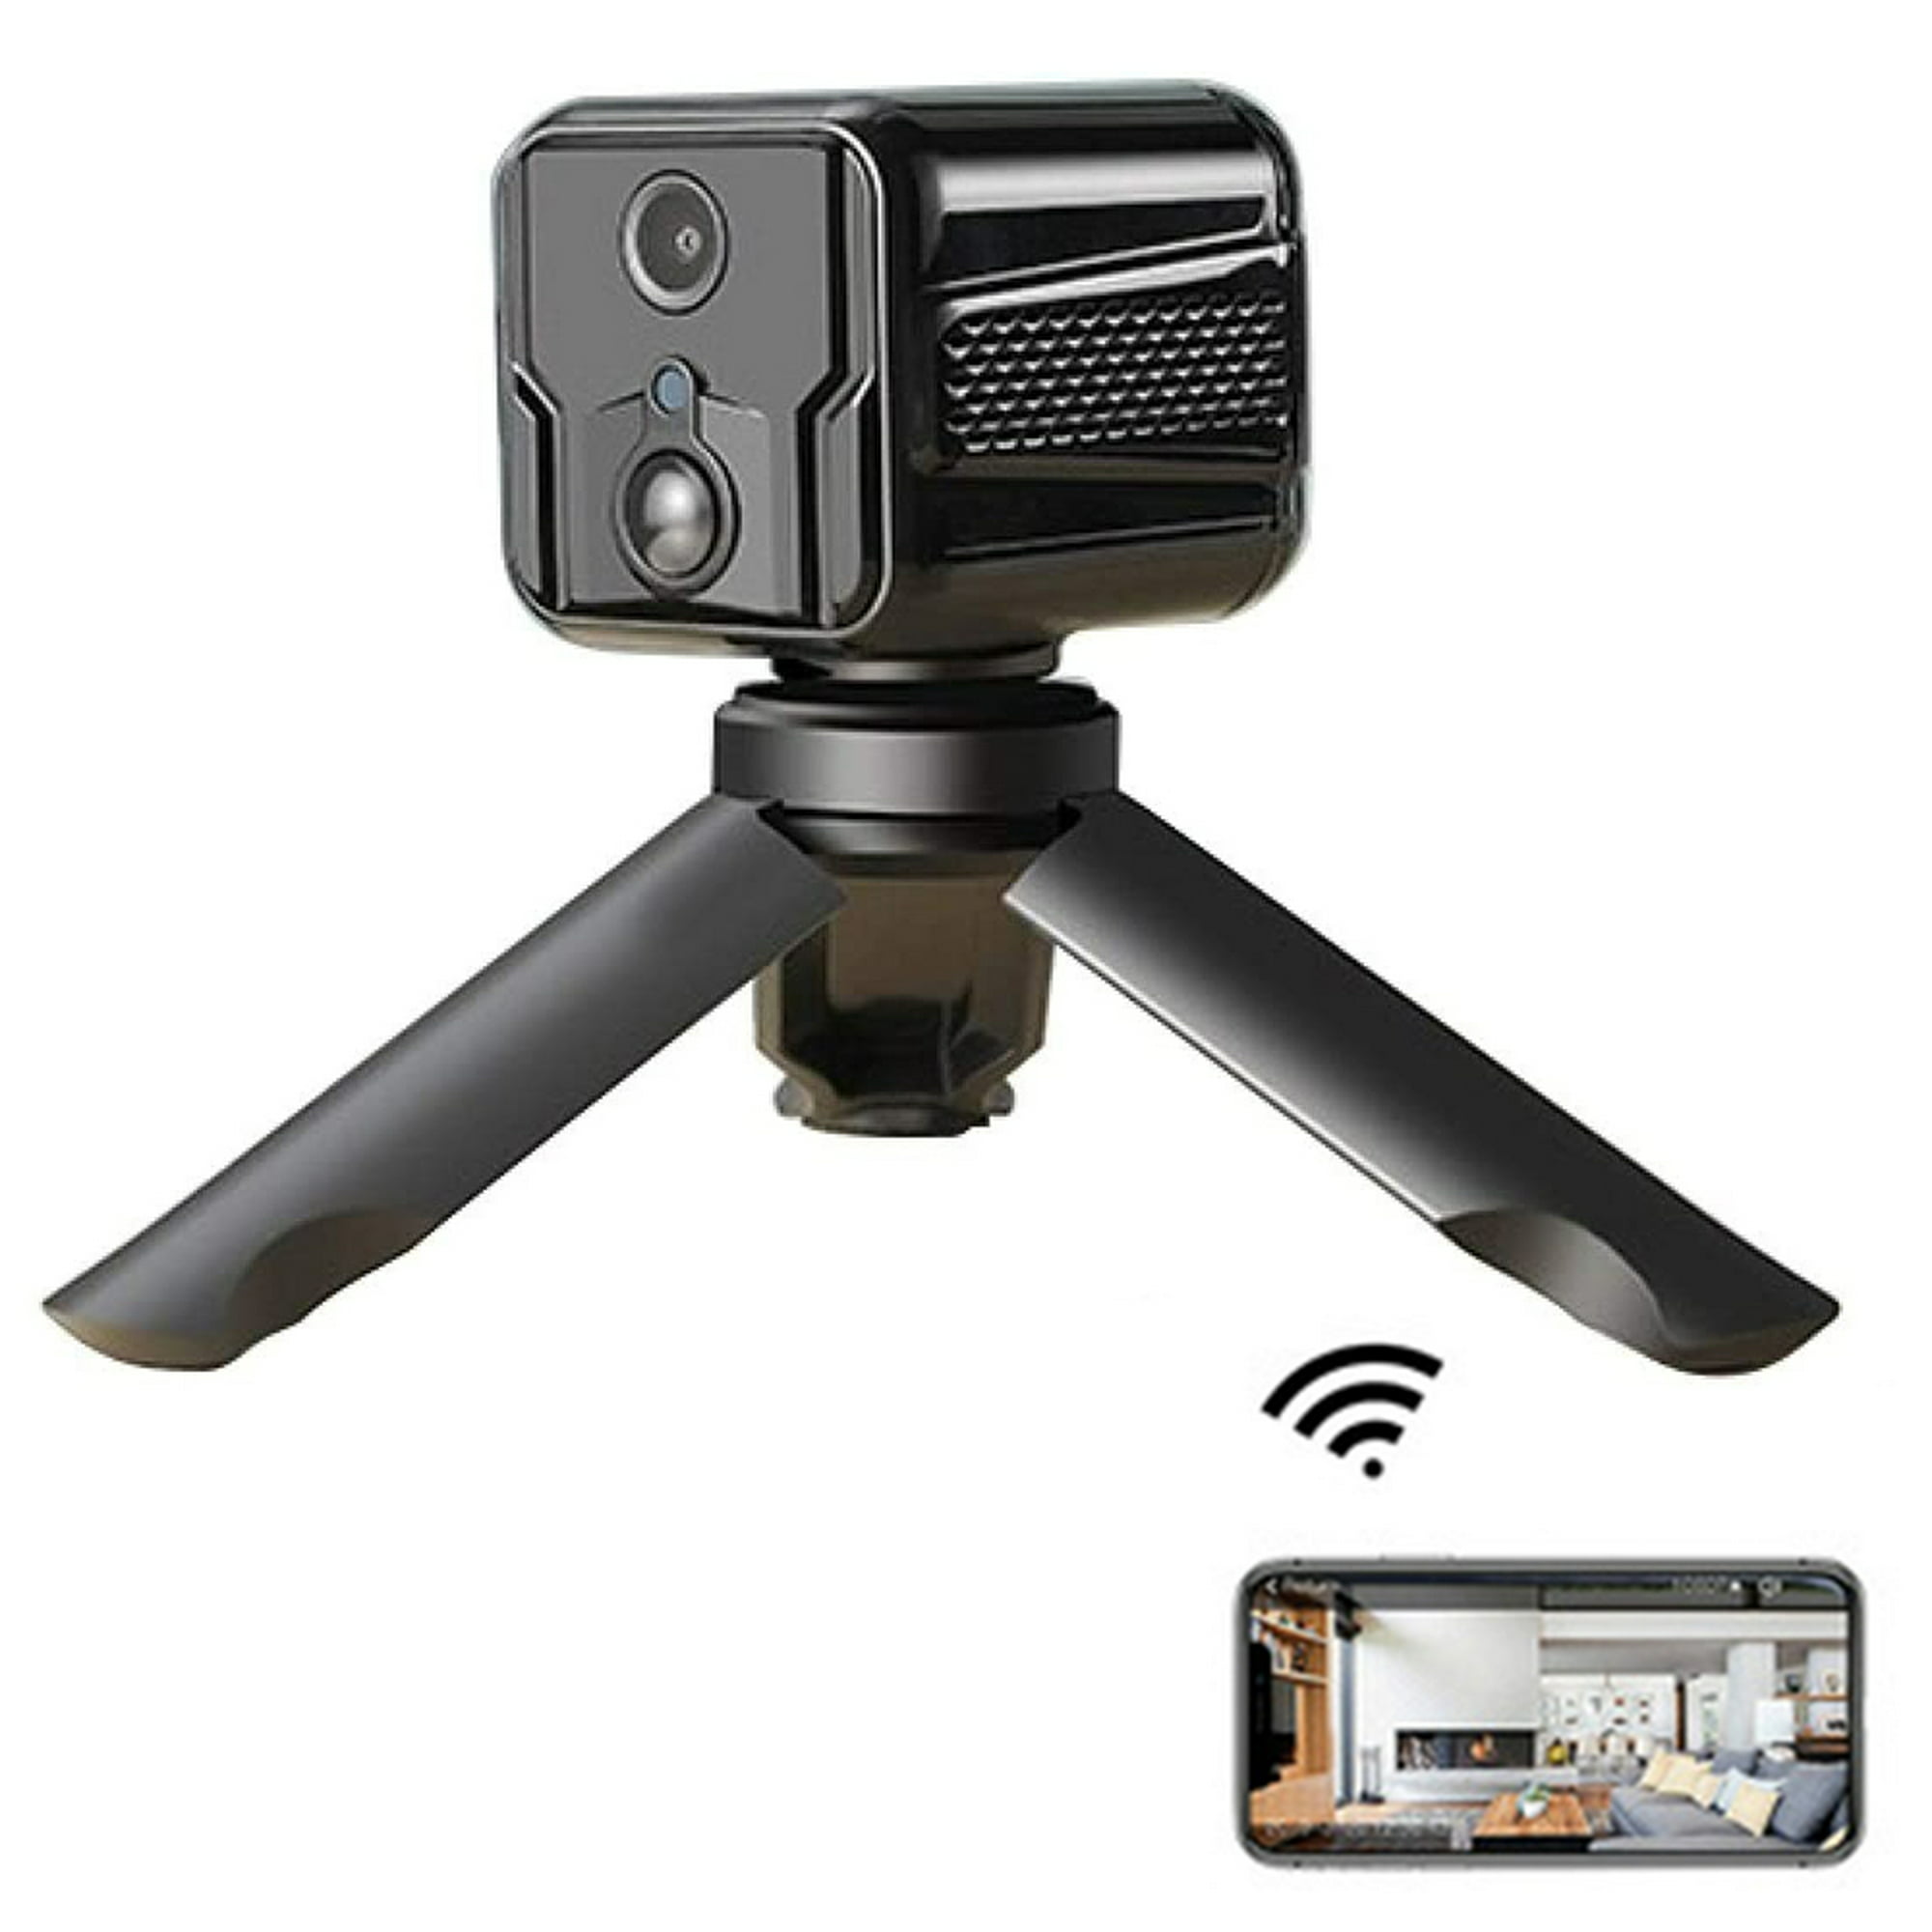 Cámara espía WiFi interior HD mini cámara oculta micro cámara de vigilancia  inalámbrica para coche/hogar/niños de larga duración al aire